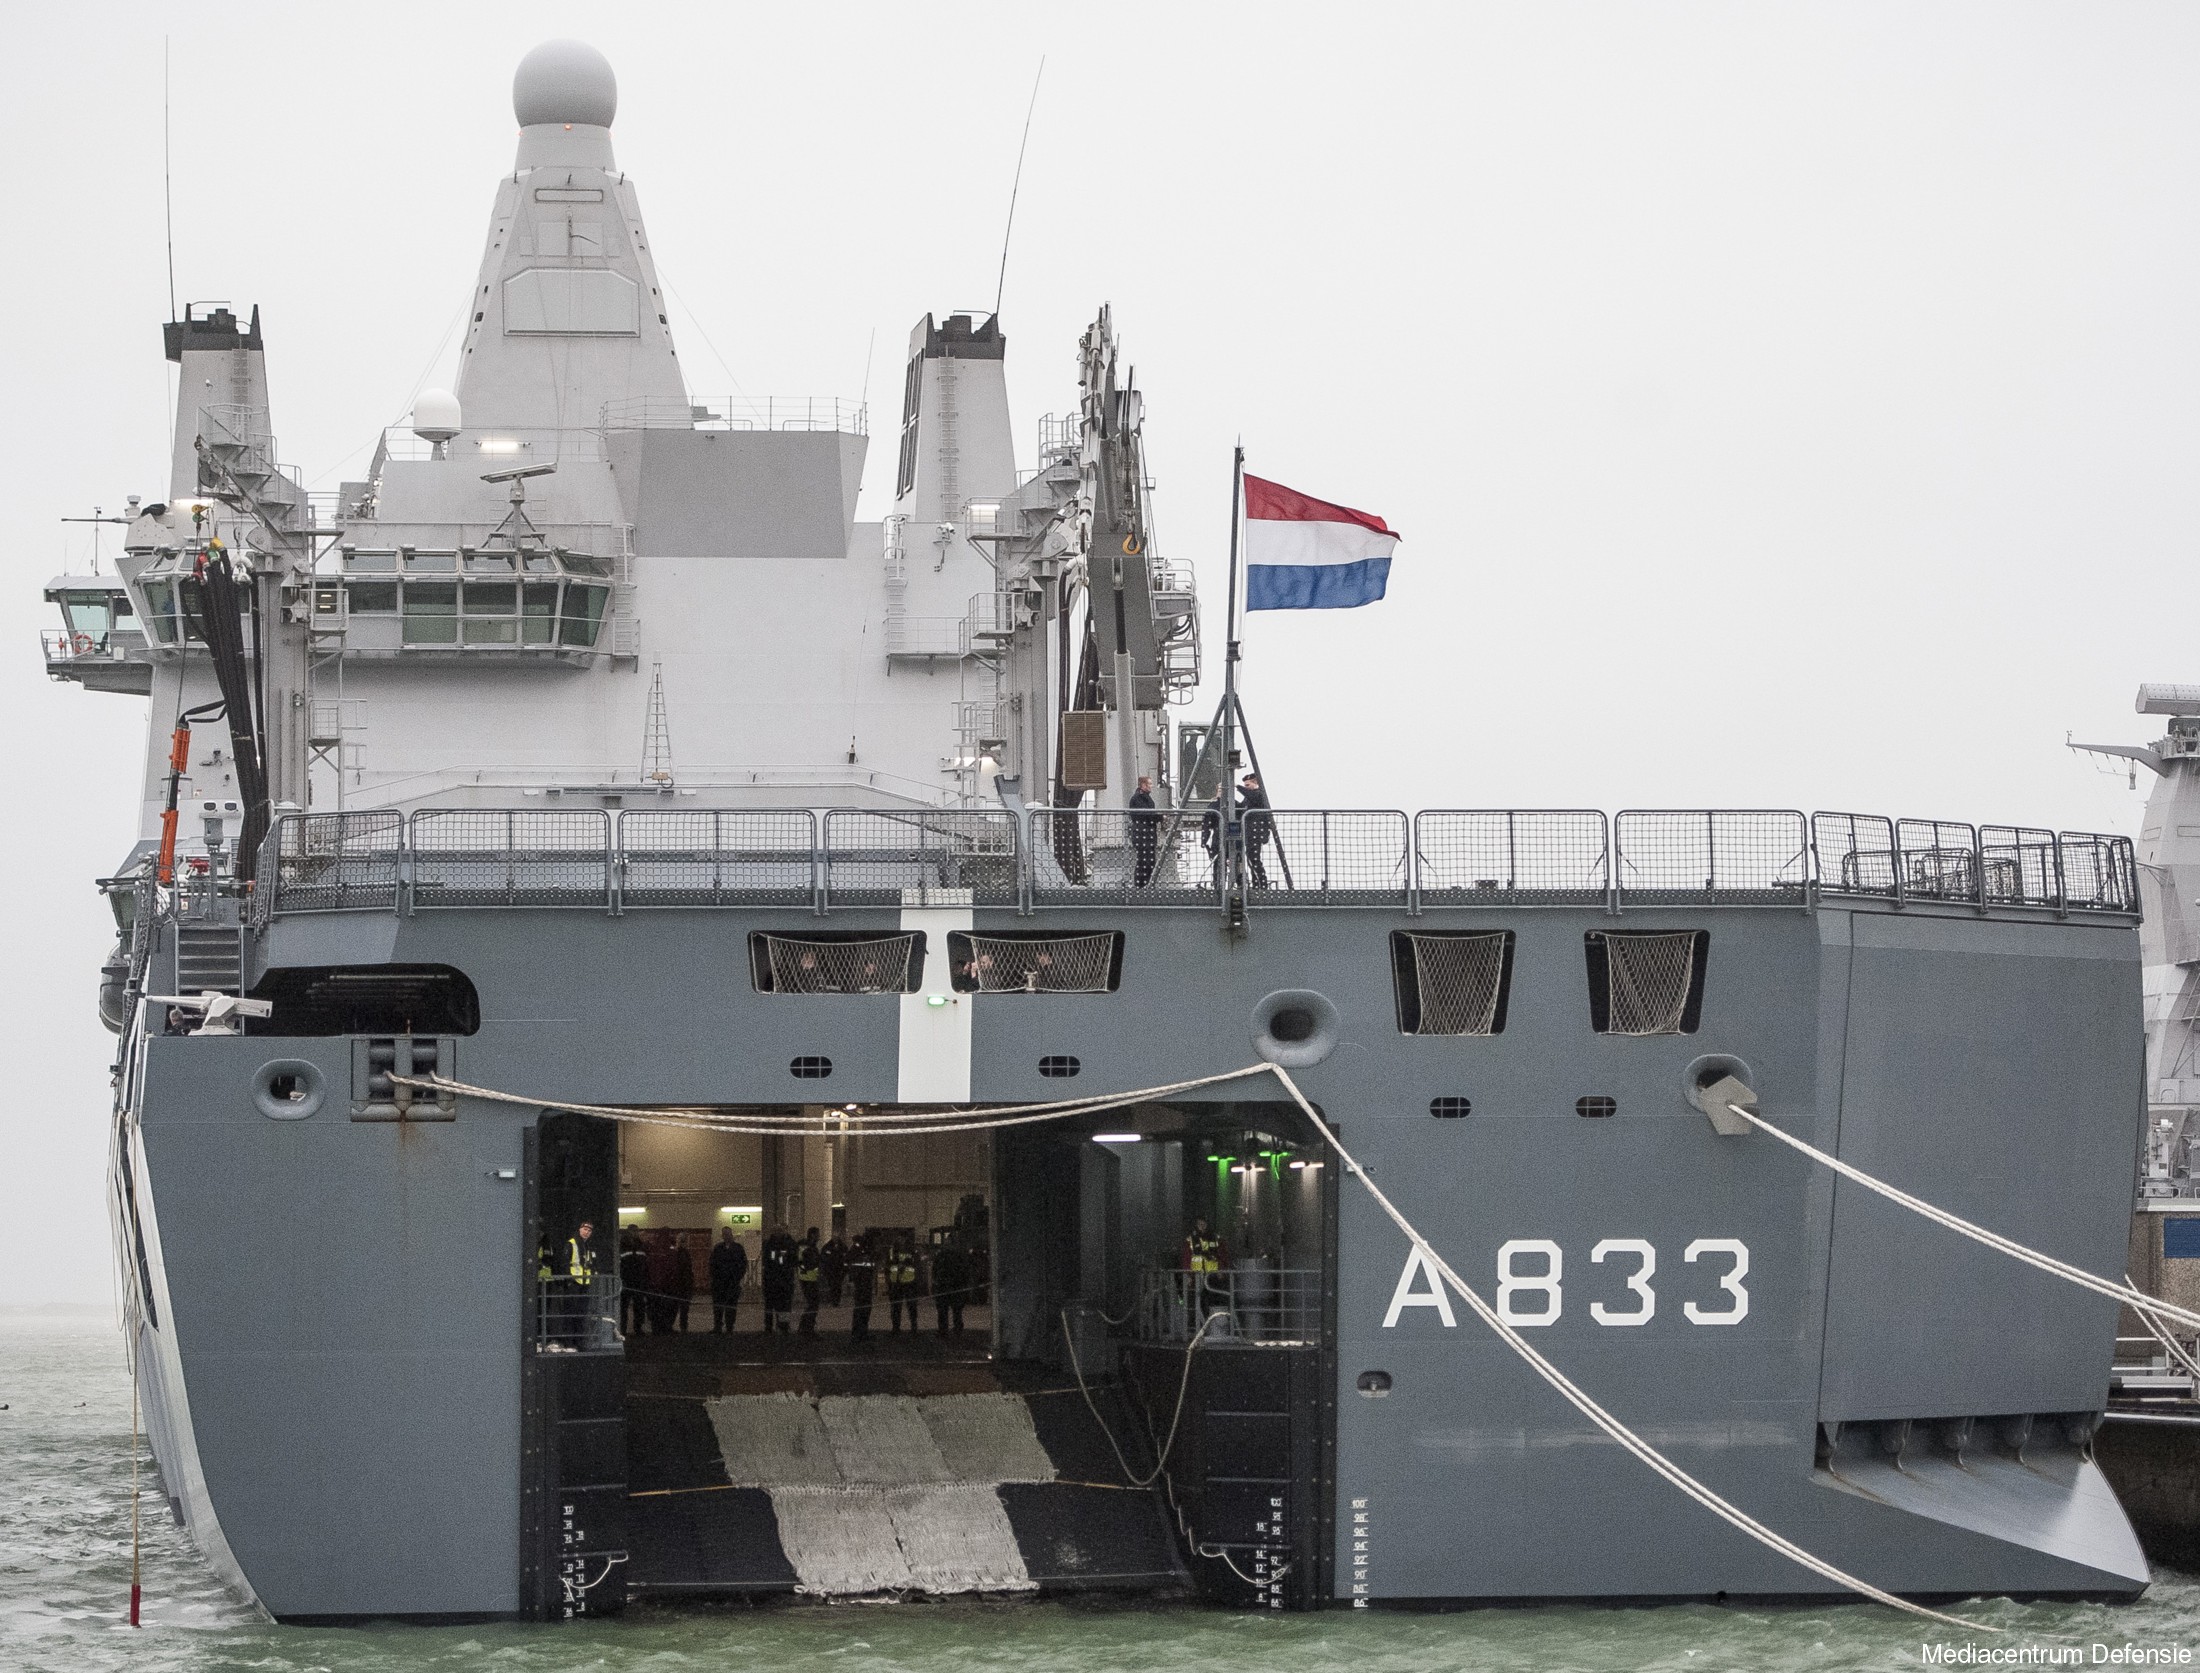 a-833 hnlms karel doorman joint support ship royal netherlands navy koninklijke marine 17